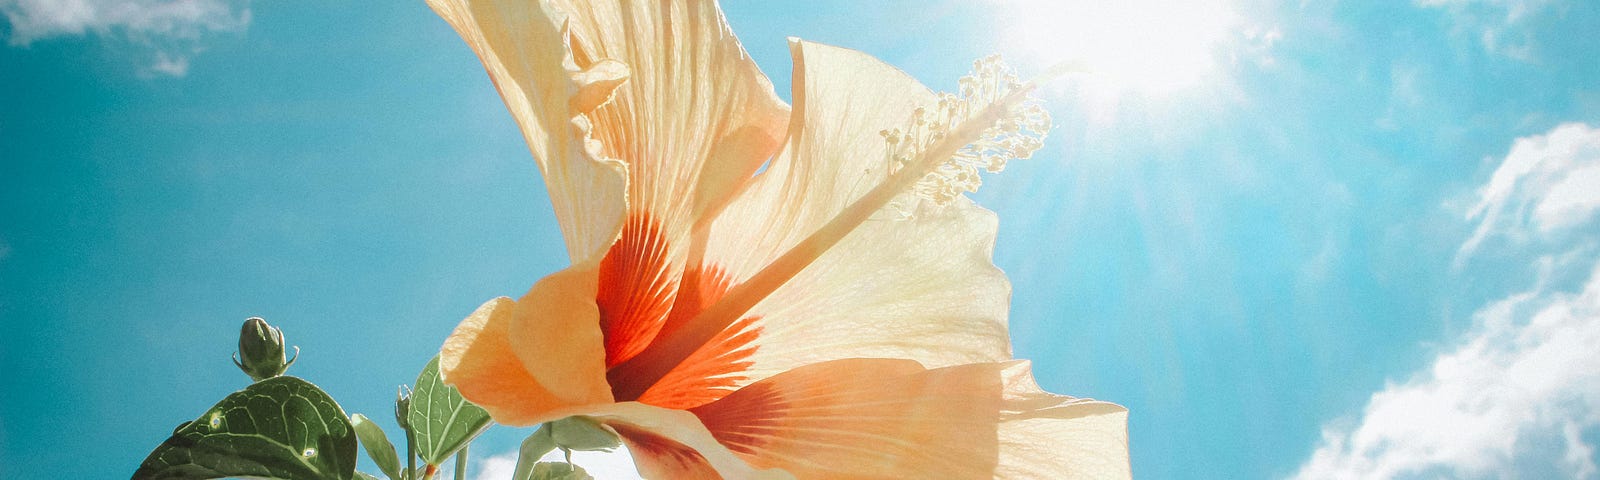 A flower grows under the sun